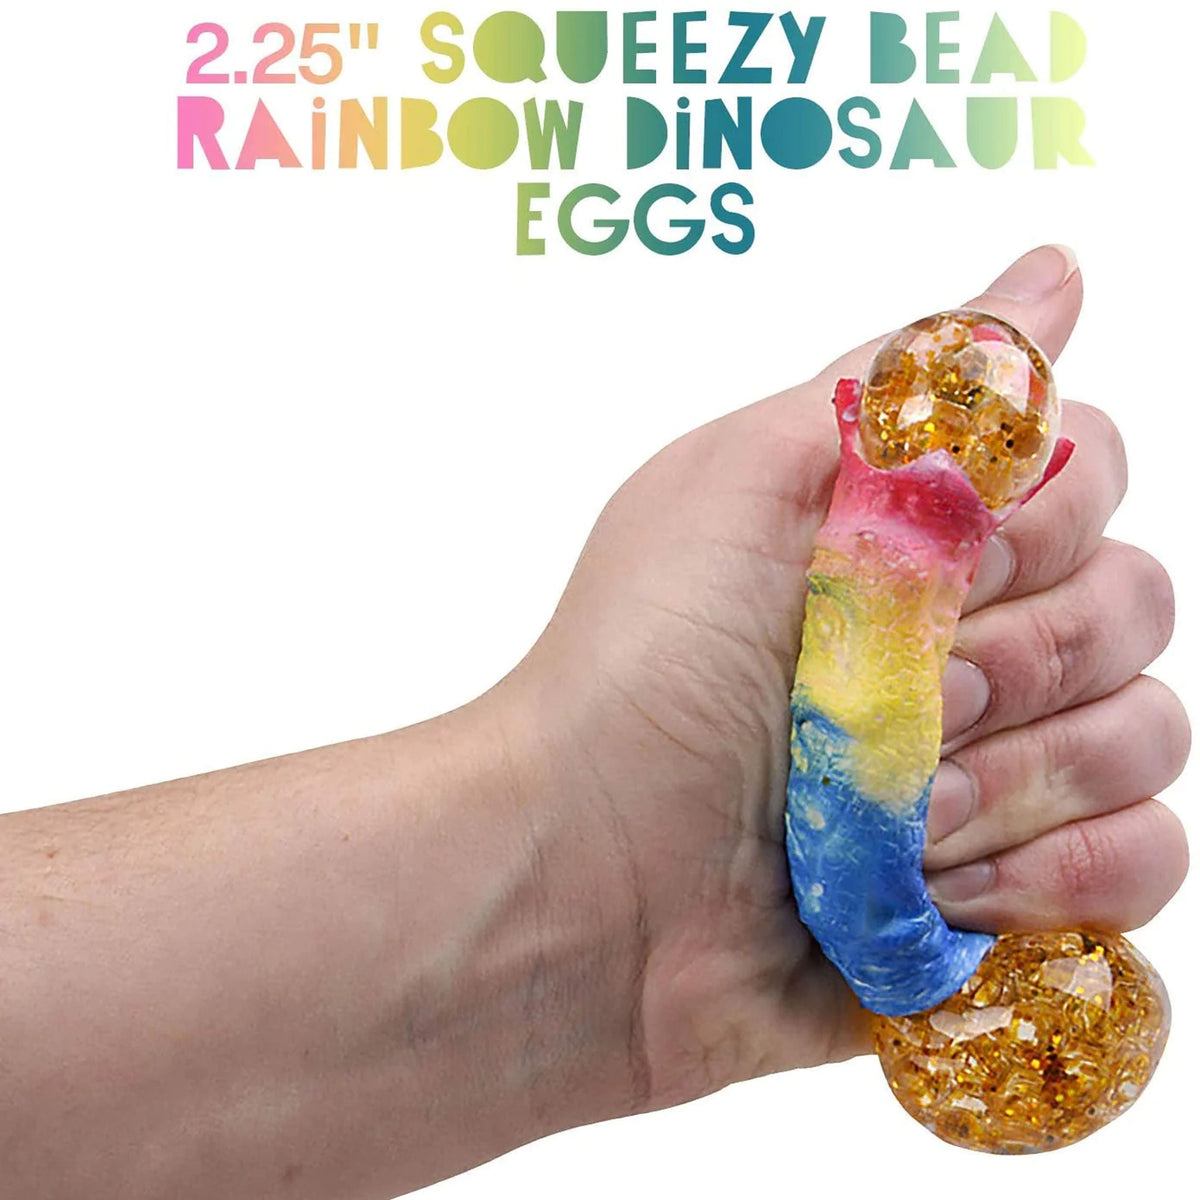 Rainbow Color Stress Relief Dinosaur Egg Toys In Bulk- Assorted